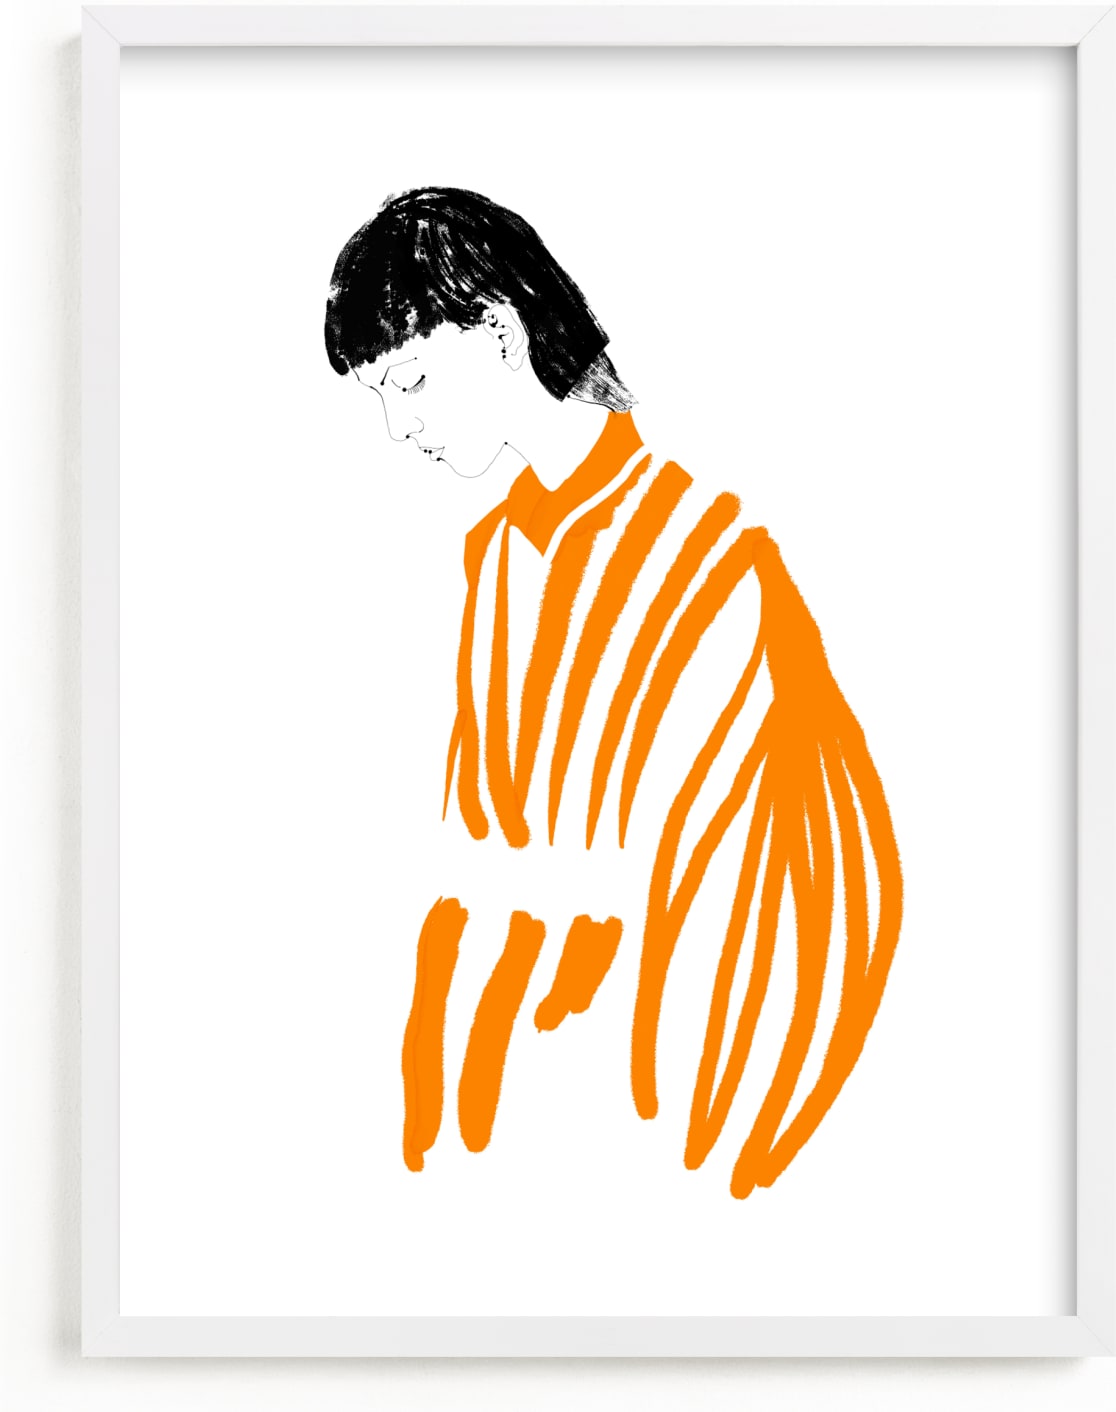 This is a orange art by Huda Lully called Orange bloom.